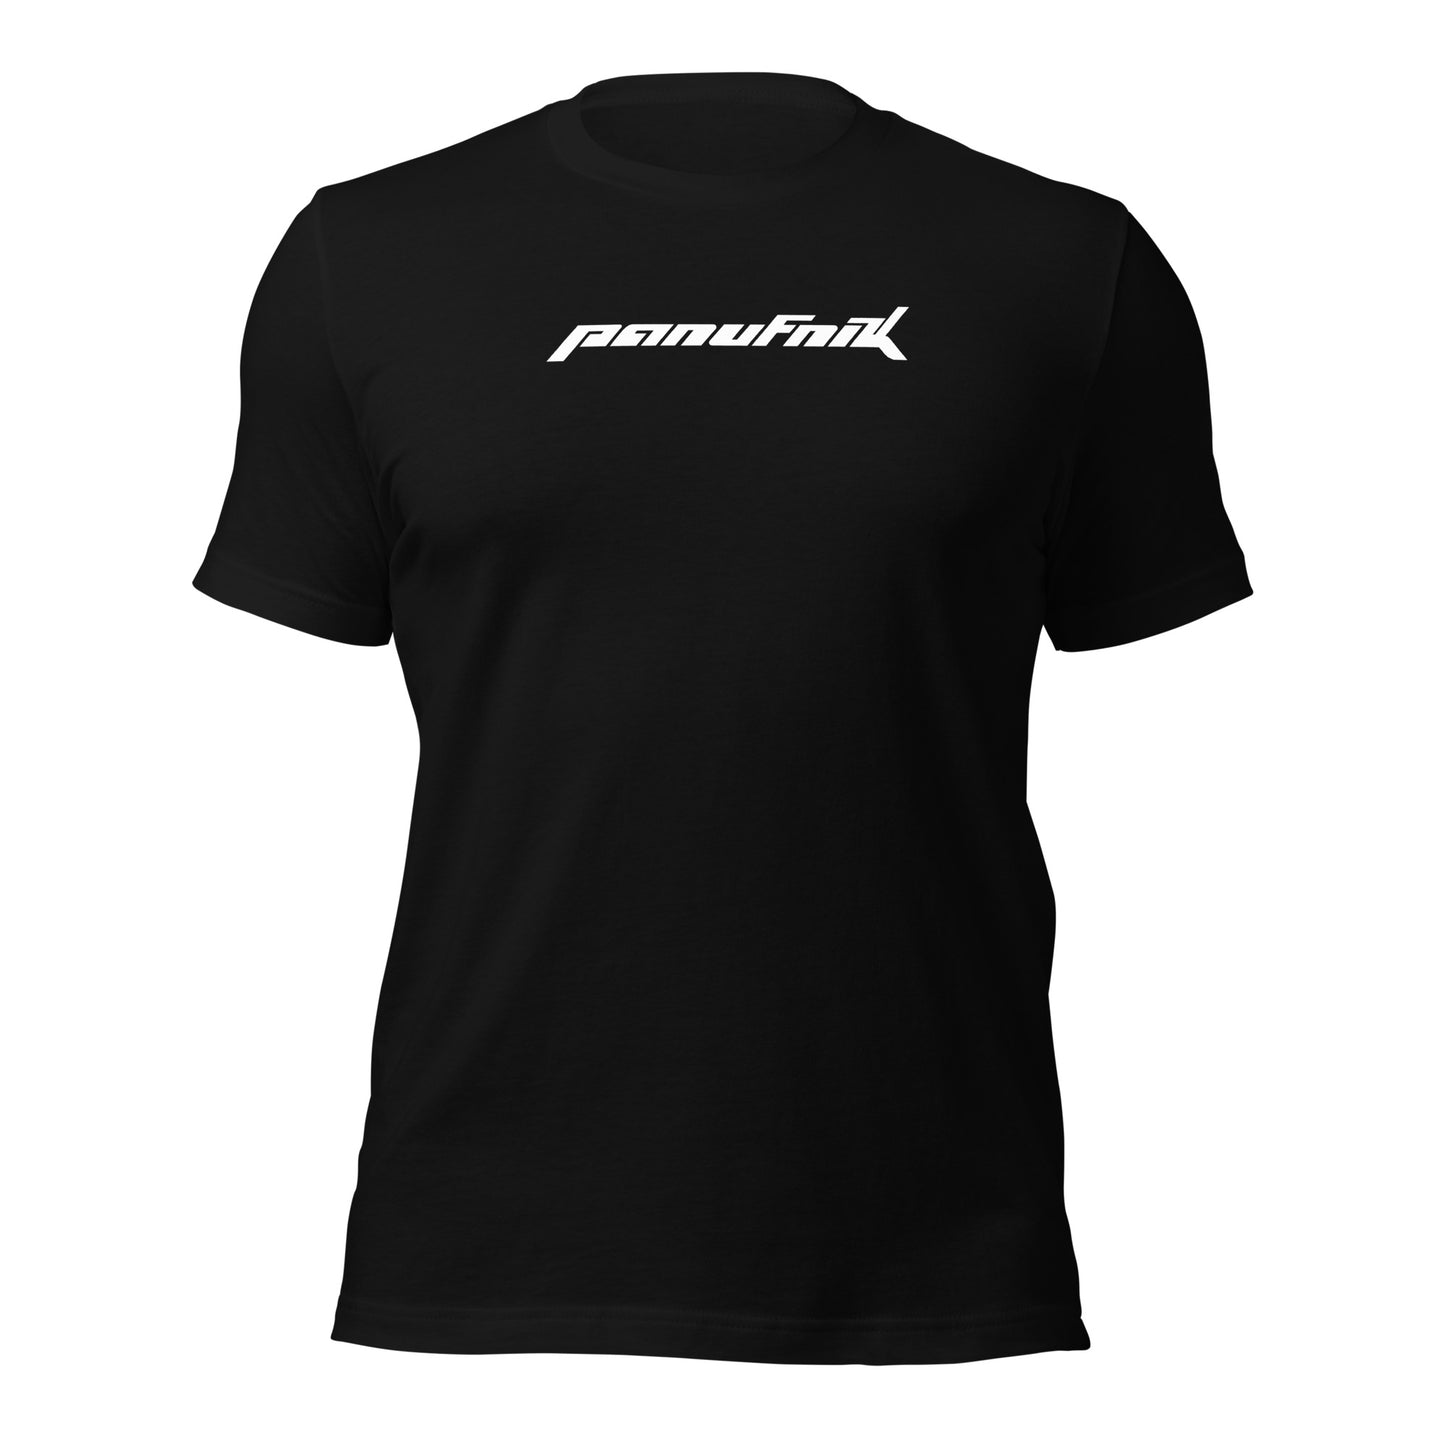 Roxanna Panufnik - Band Tees Unisex t-shirt